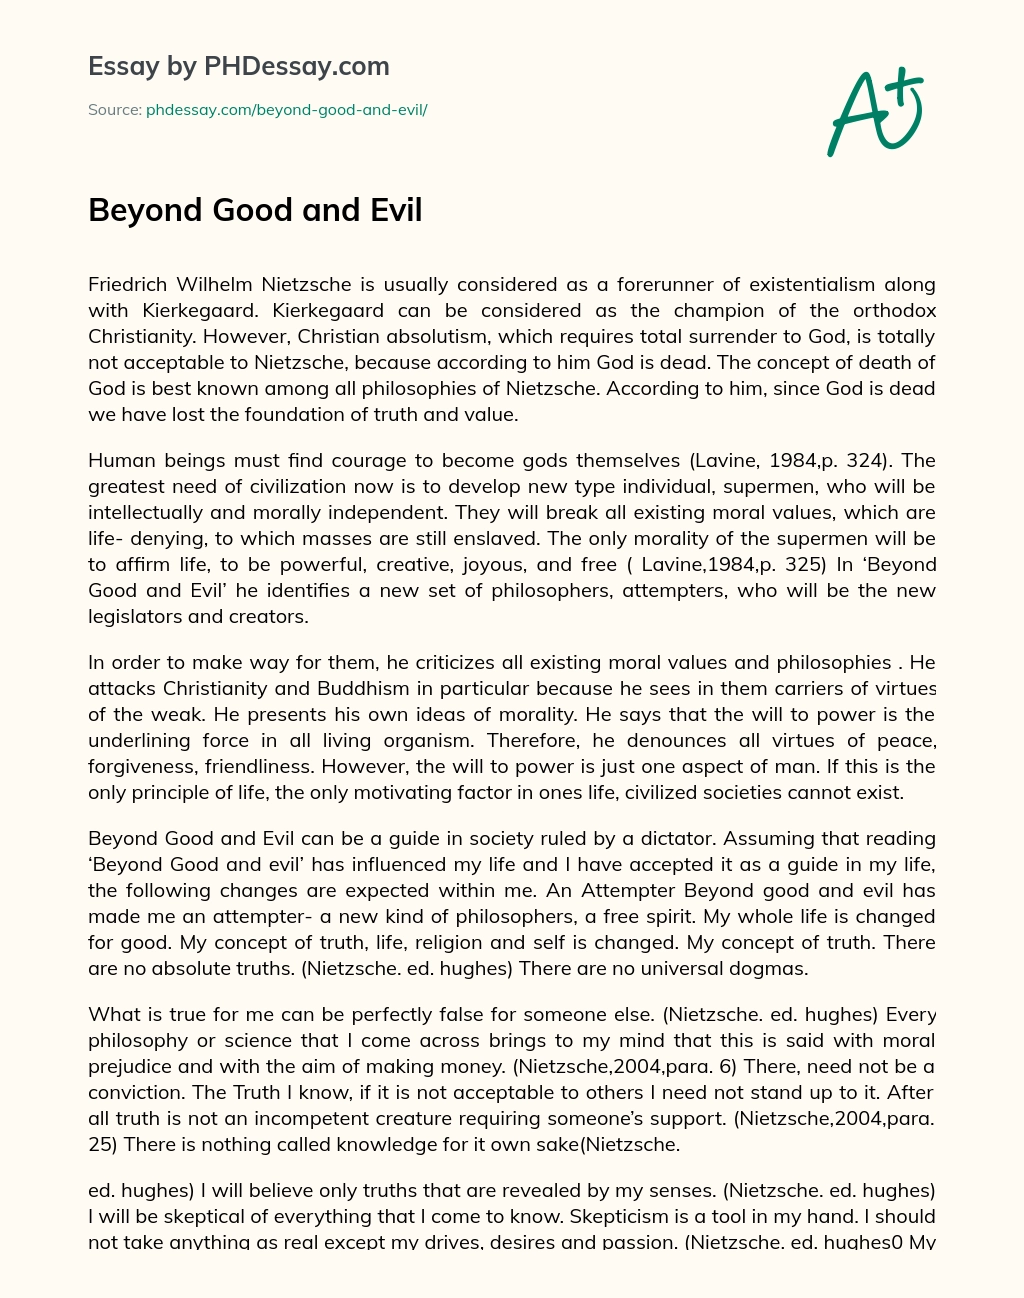 Beyond  Good  and  Evil essay